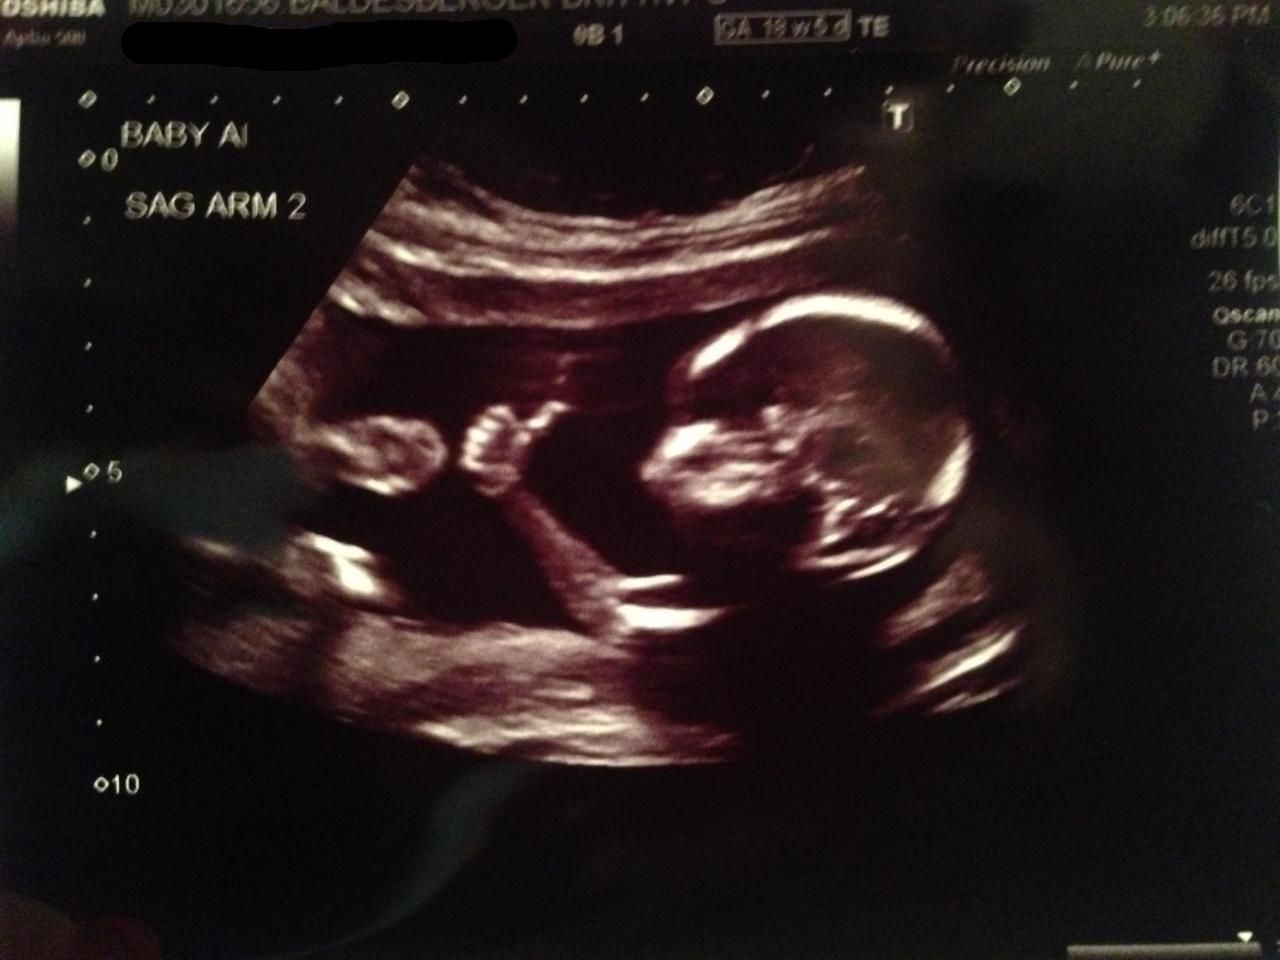 Recent ultrasound result looks good.